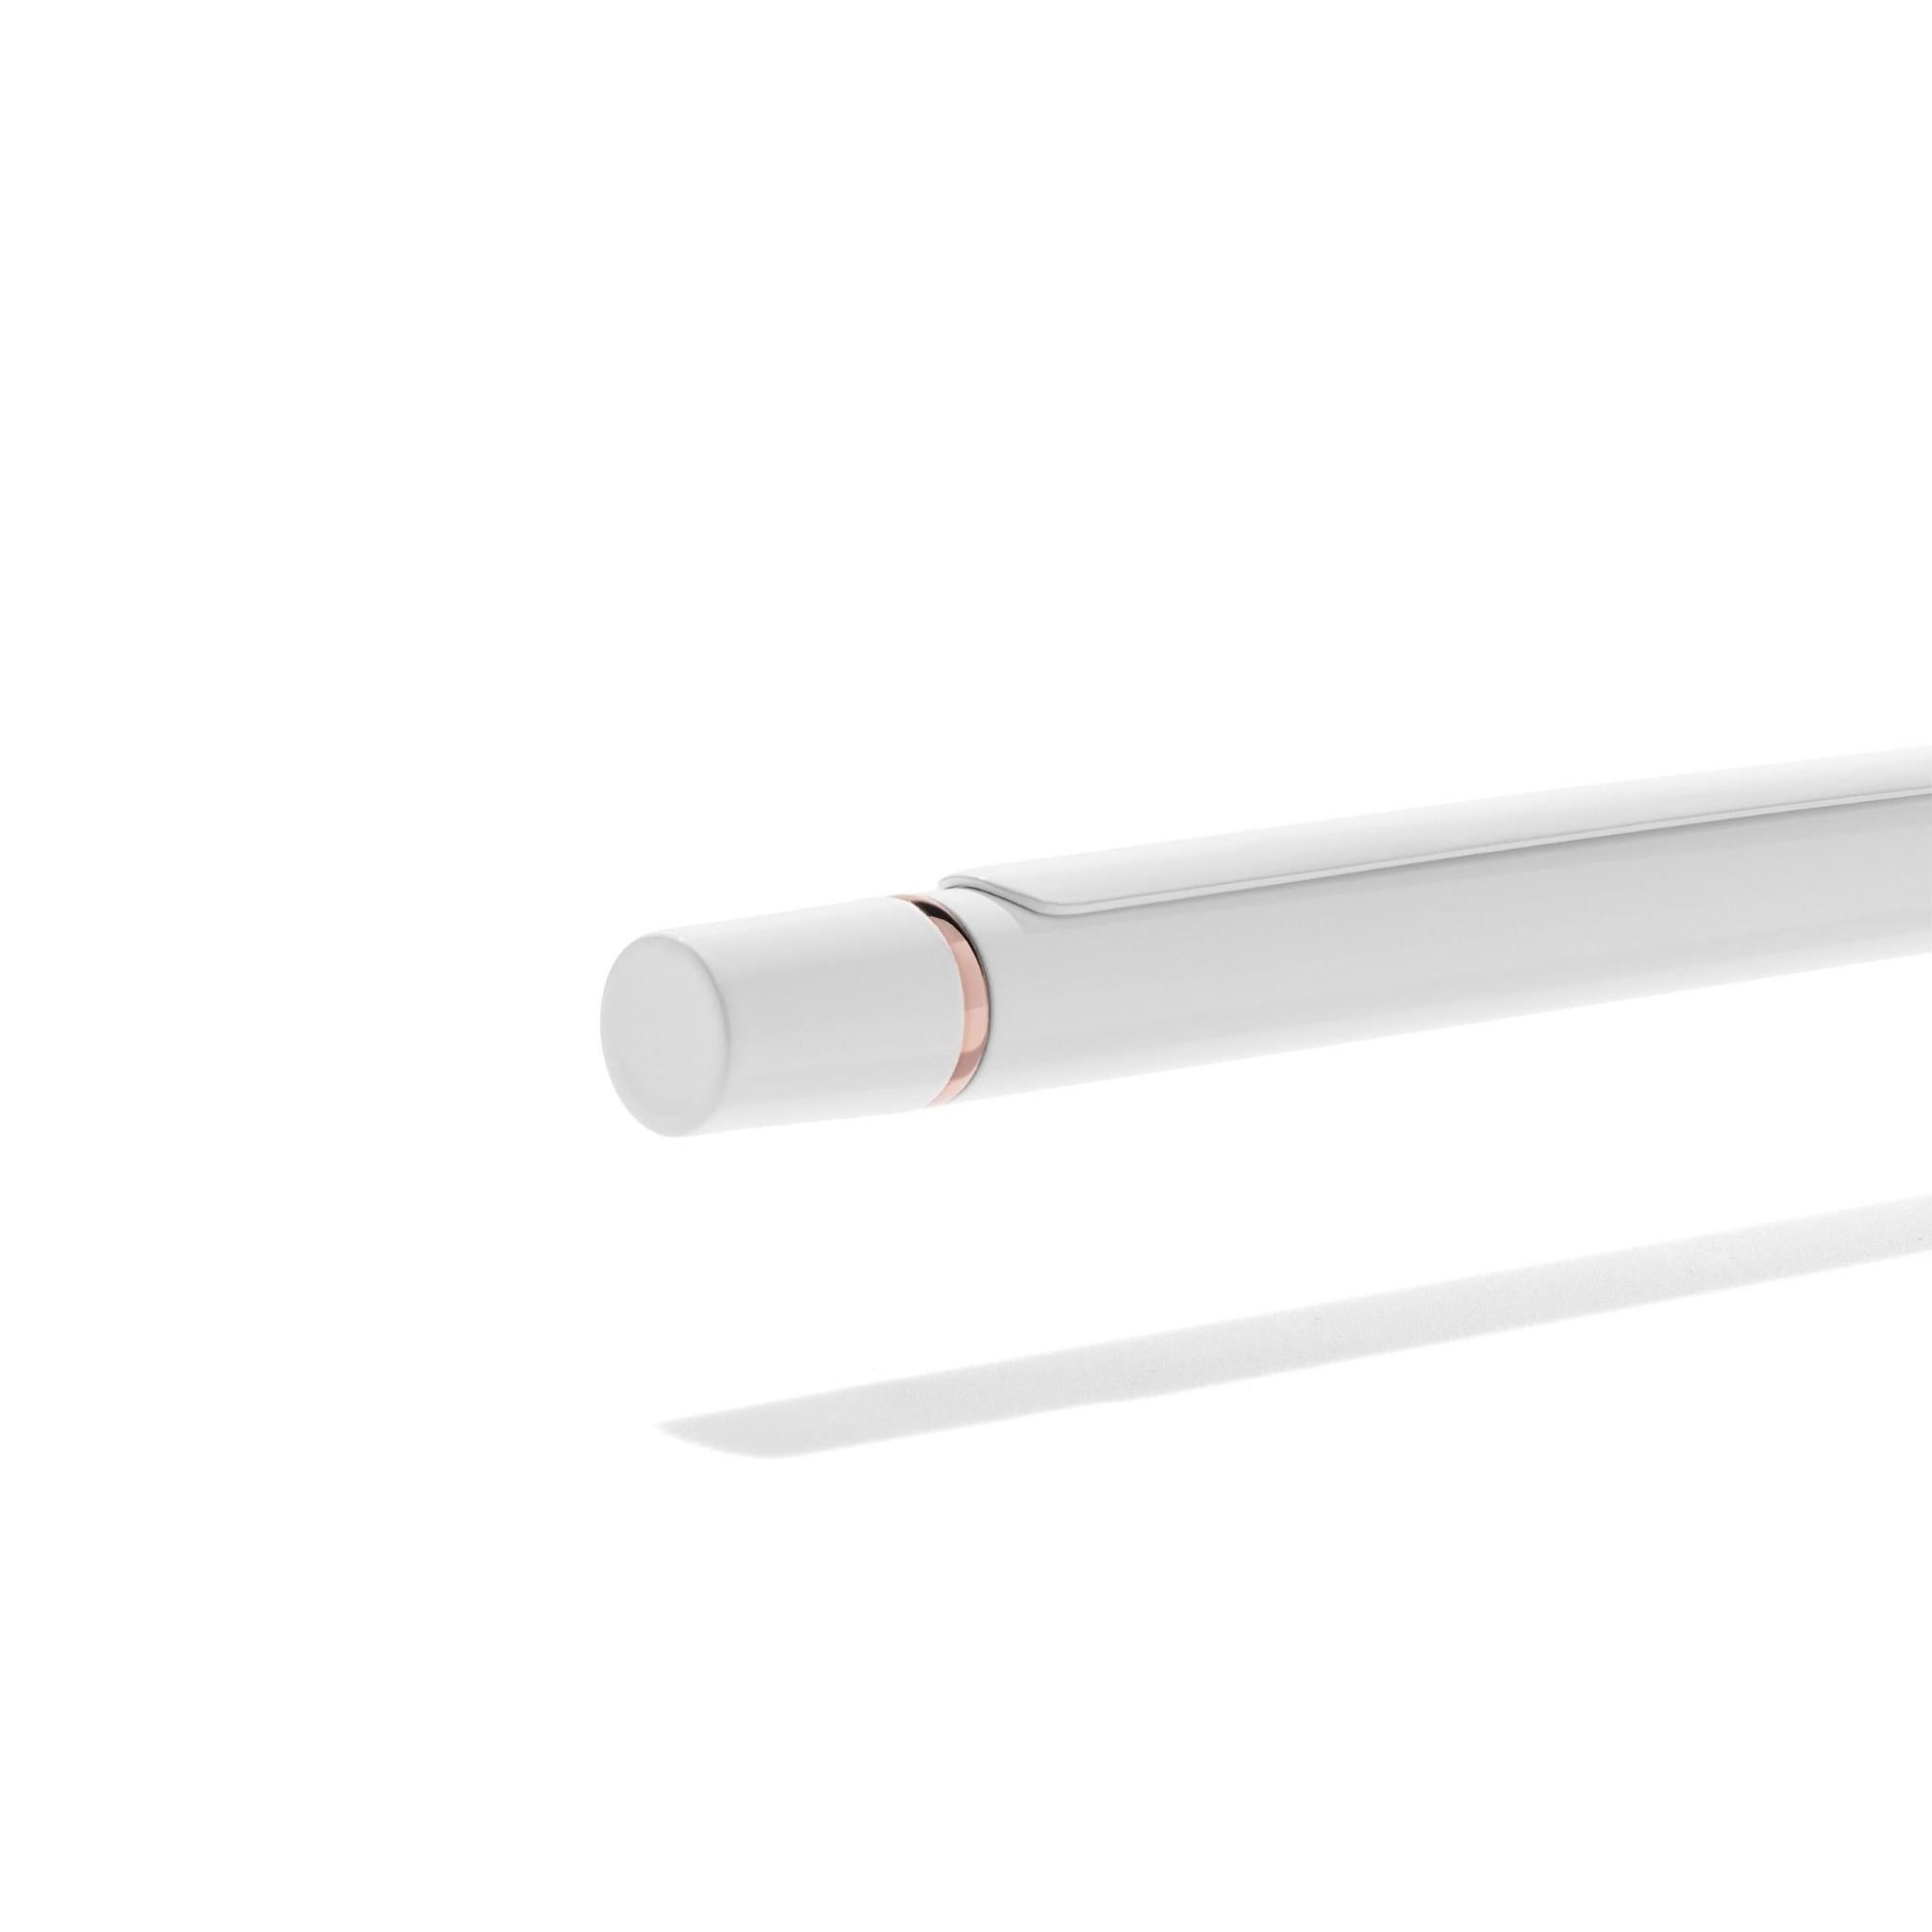 T3. Fer a Friser avec Pince SinglePass Curl Blanc - 0.5” - Concept C. Shop